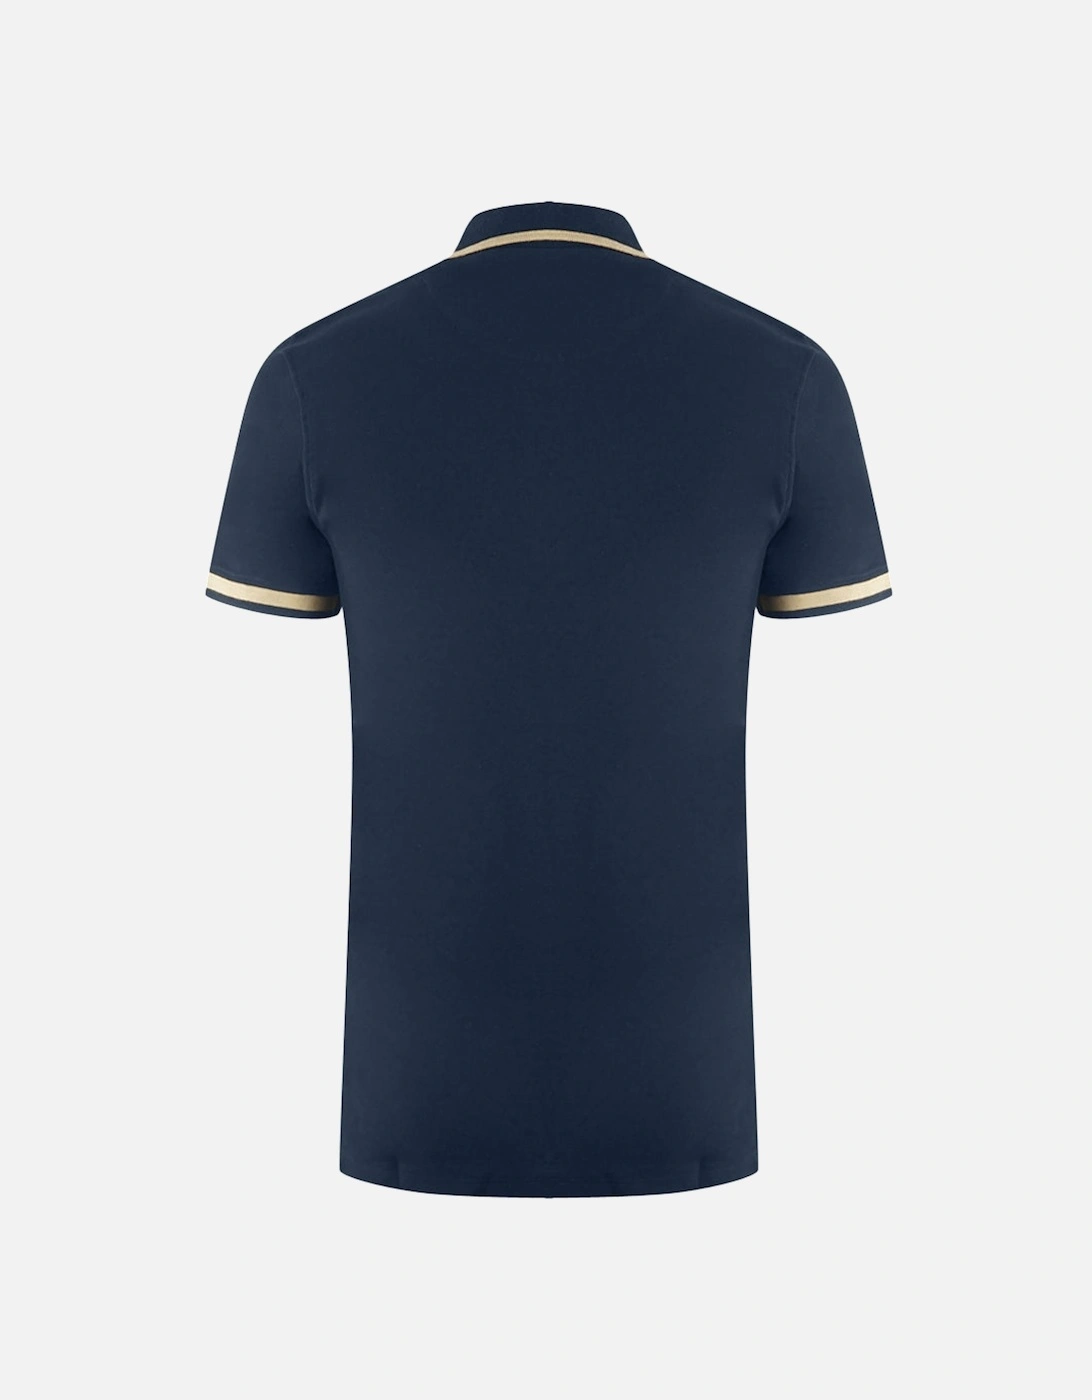 Tipped Aldis Navy Blue Polo Shirt